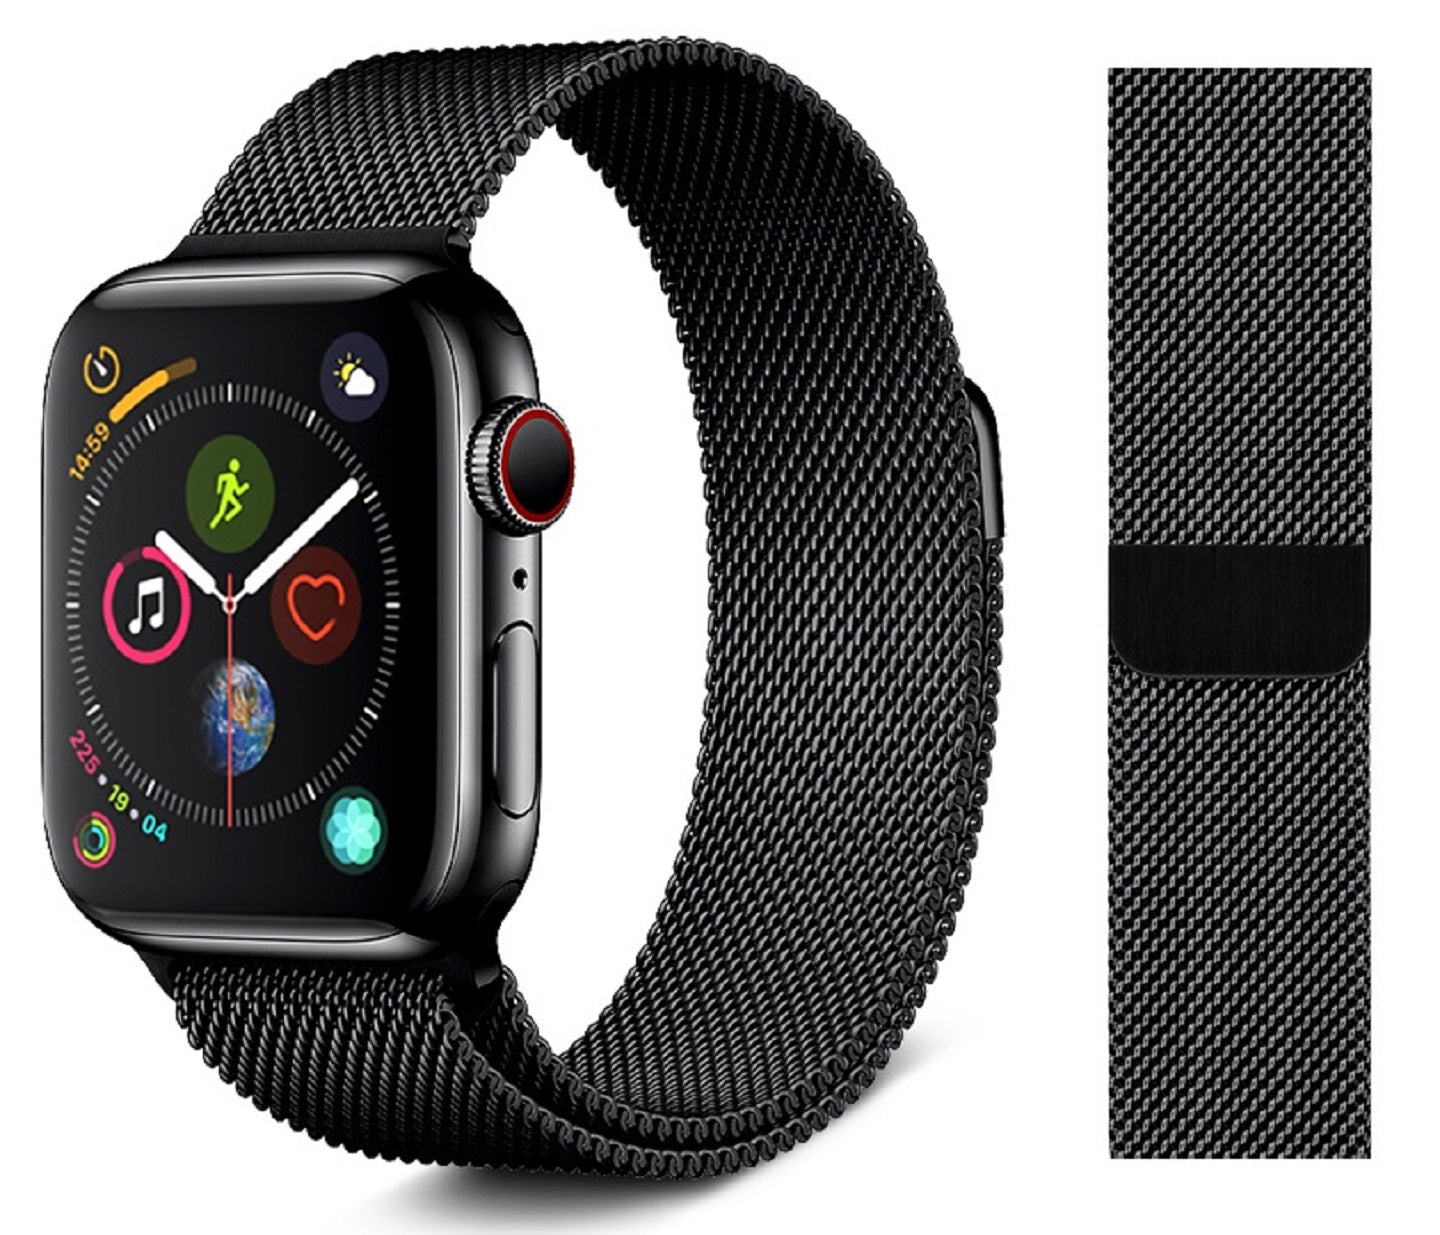 VPG 不銹鋼織網磁吸回環式Apple Watch 錶帶 全系列適用 (3色)